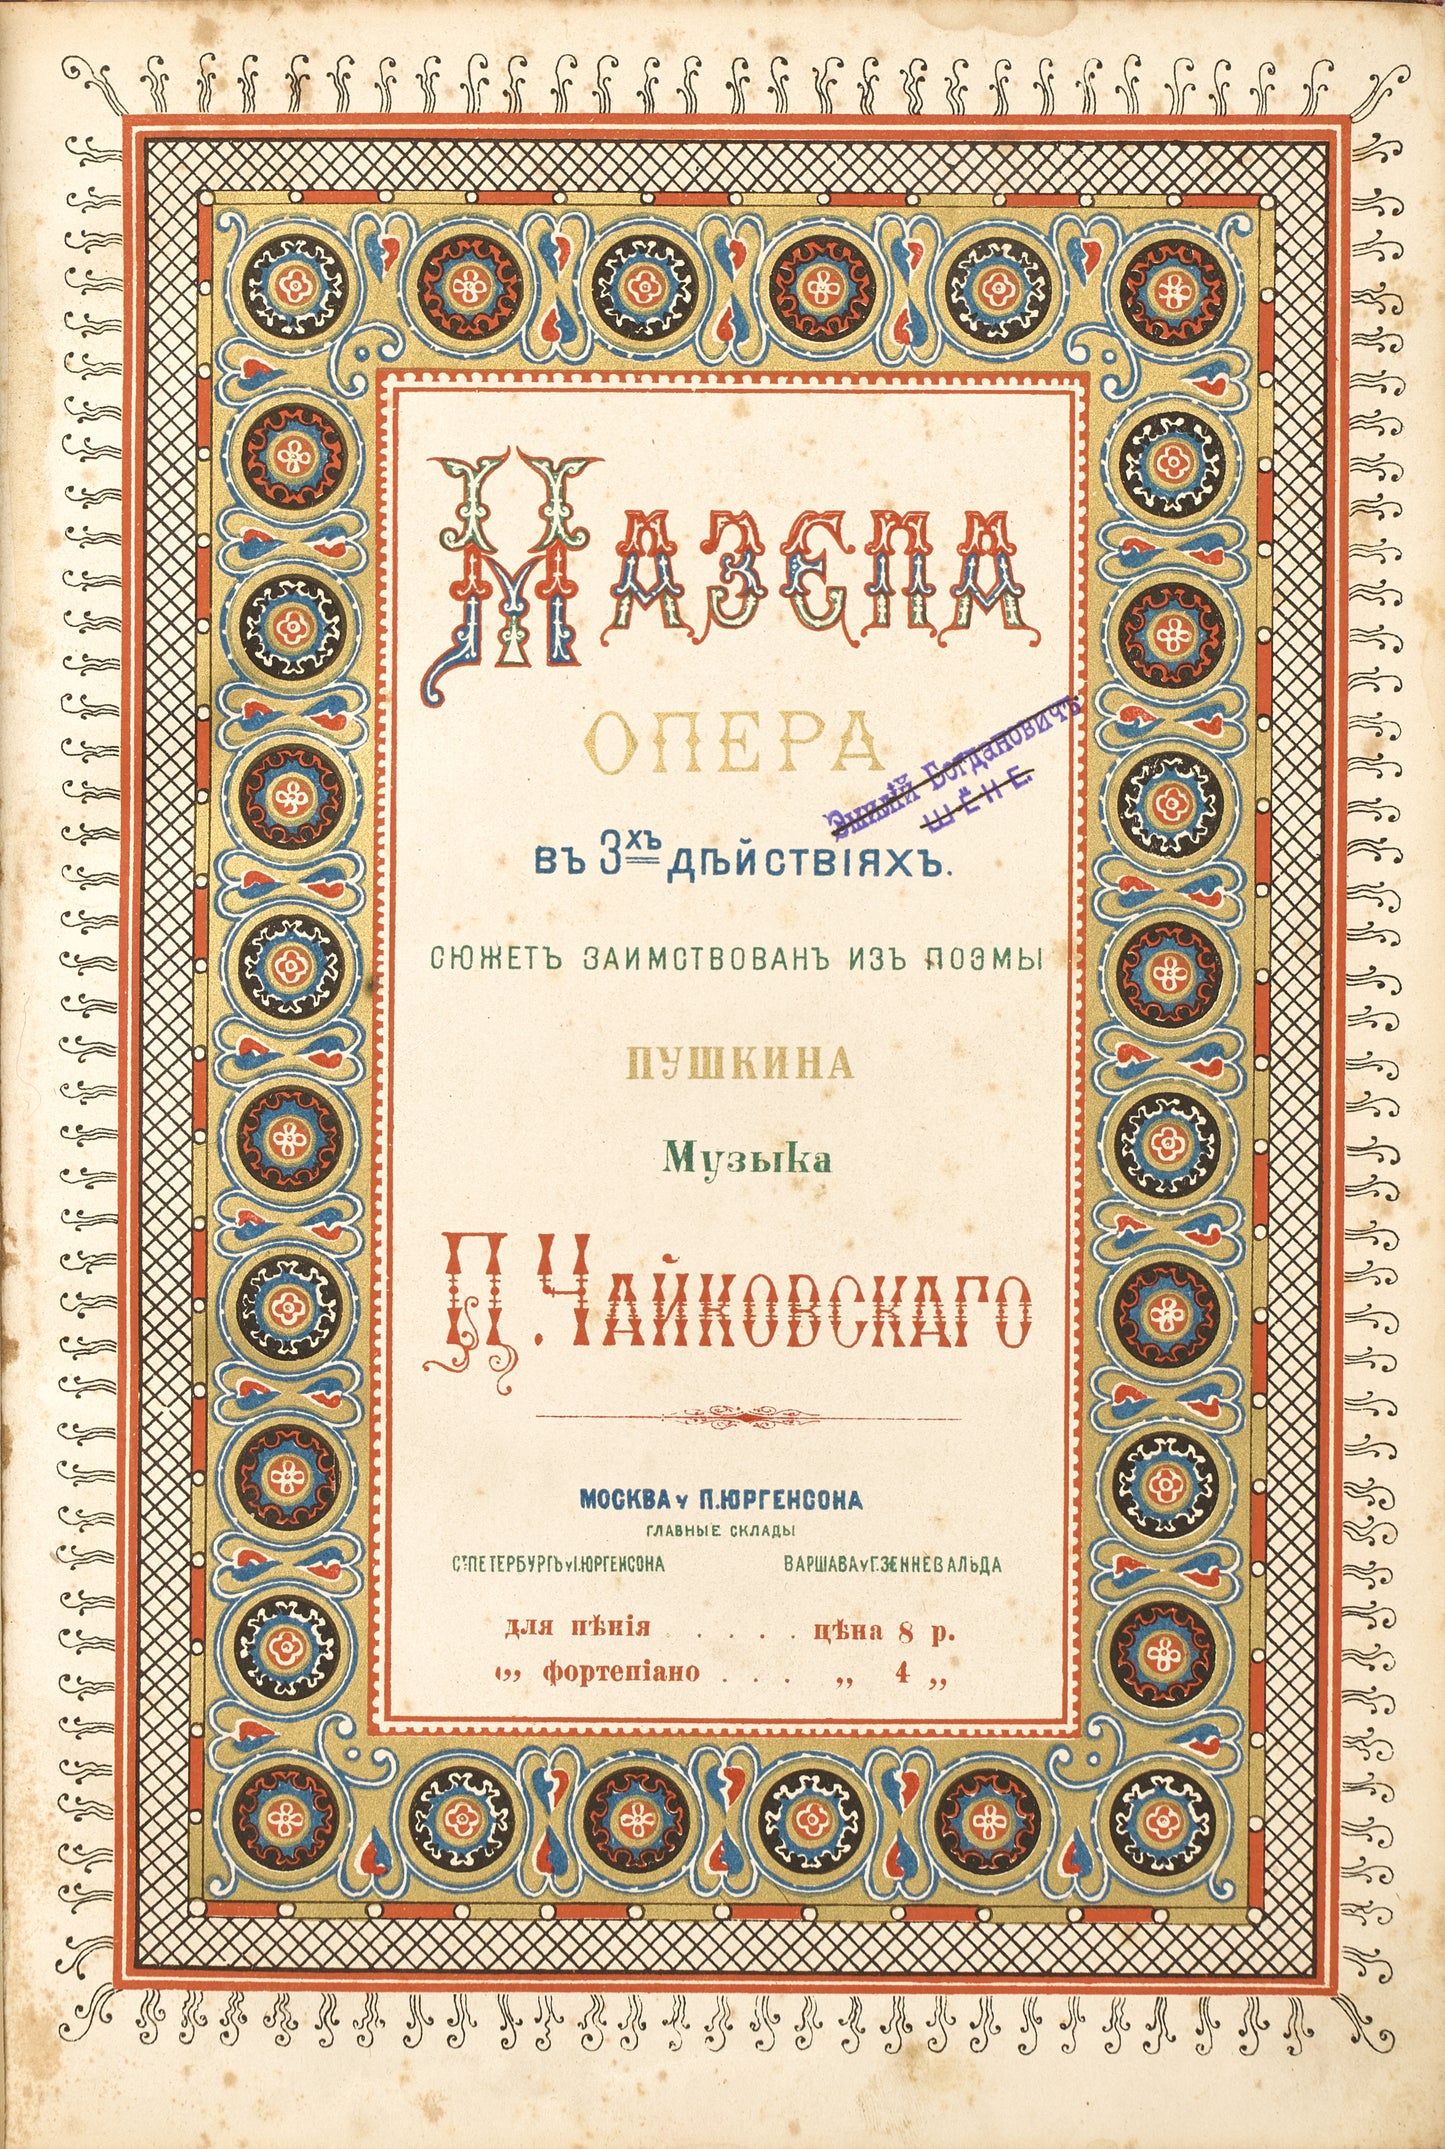 Mazeppa: Opera in three acts. Rare printed musical score.